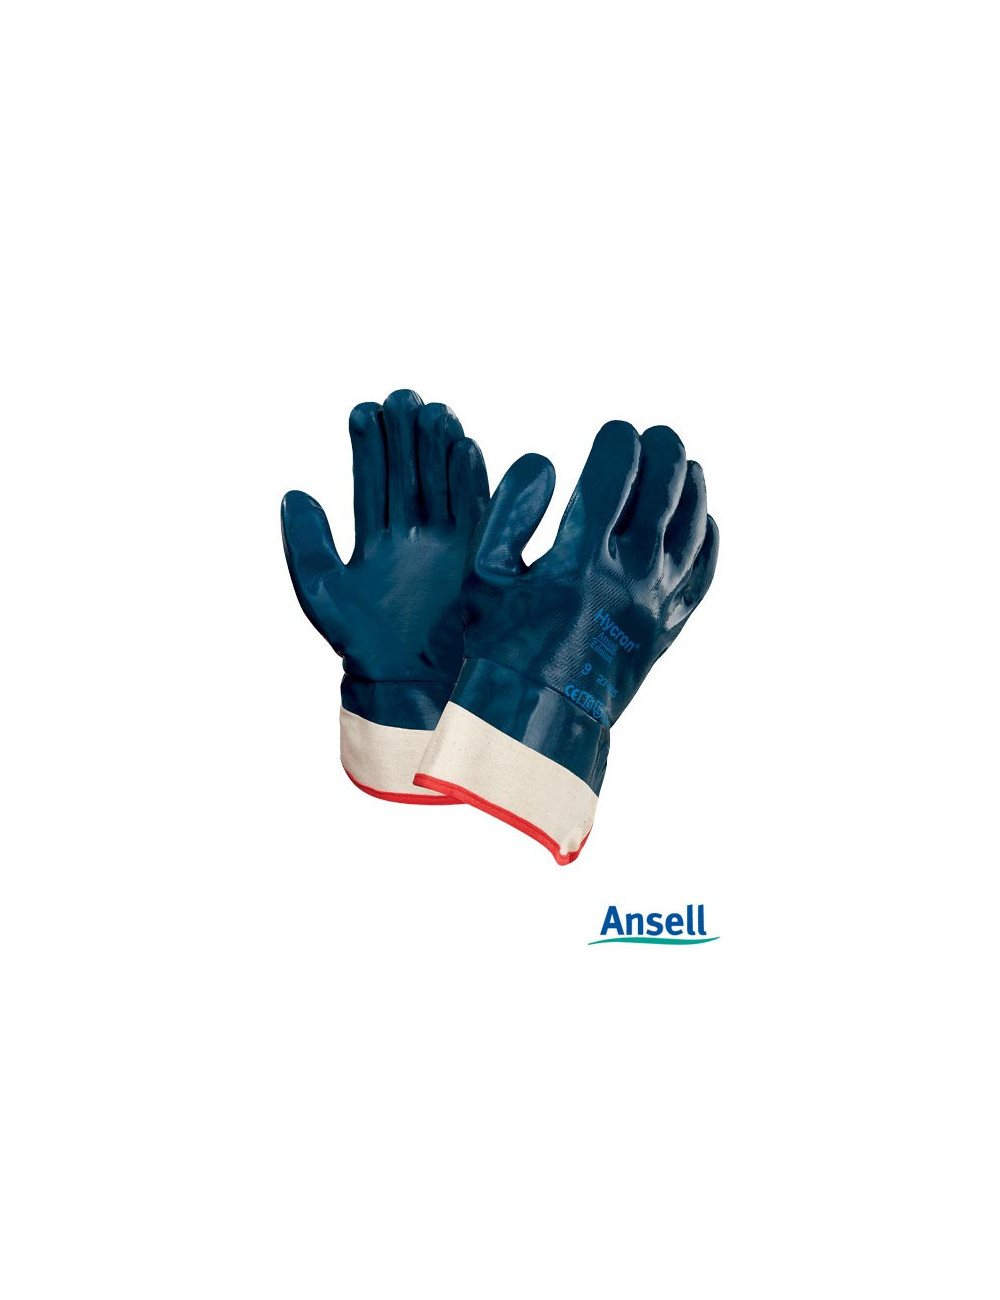 Protective gloves rahycron27-805 g navy Ansell